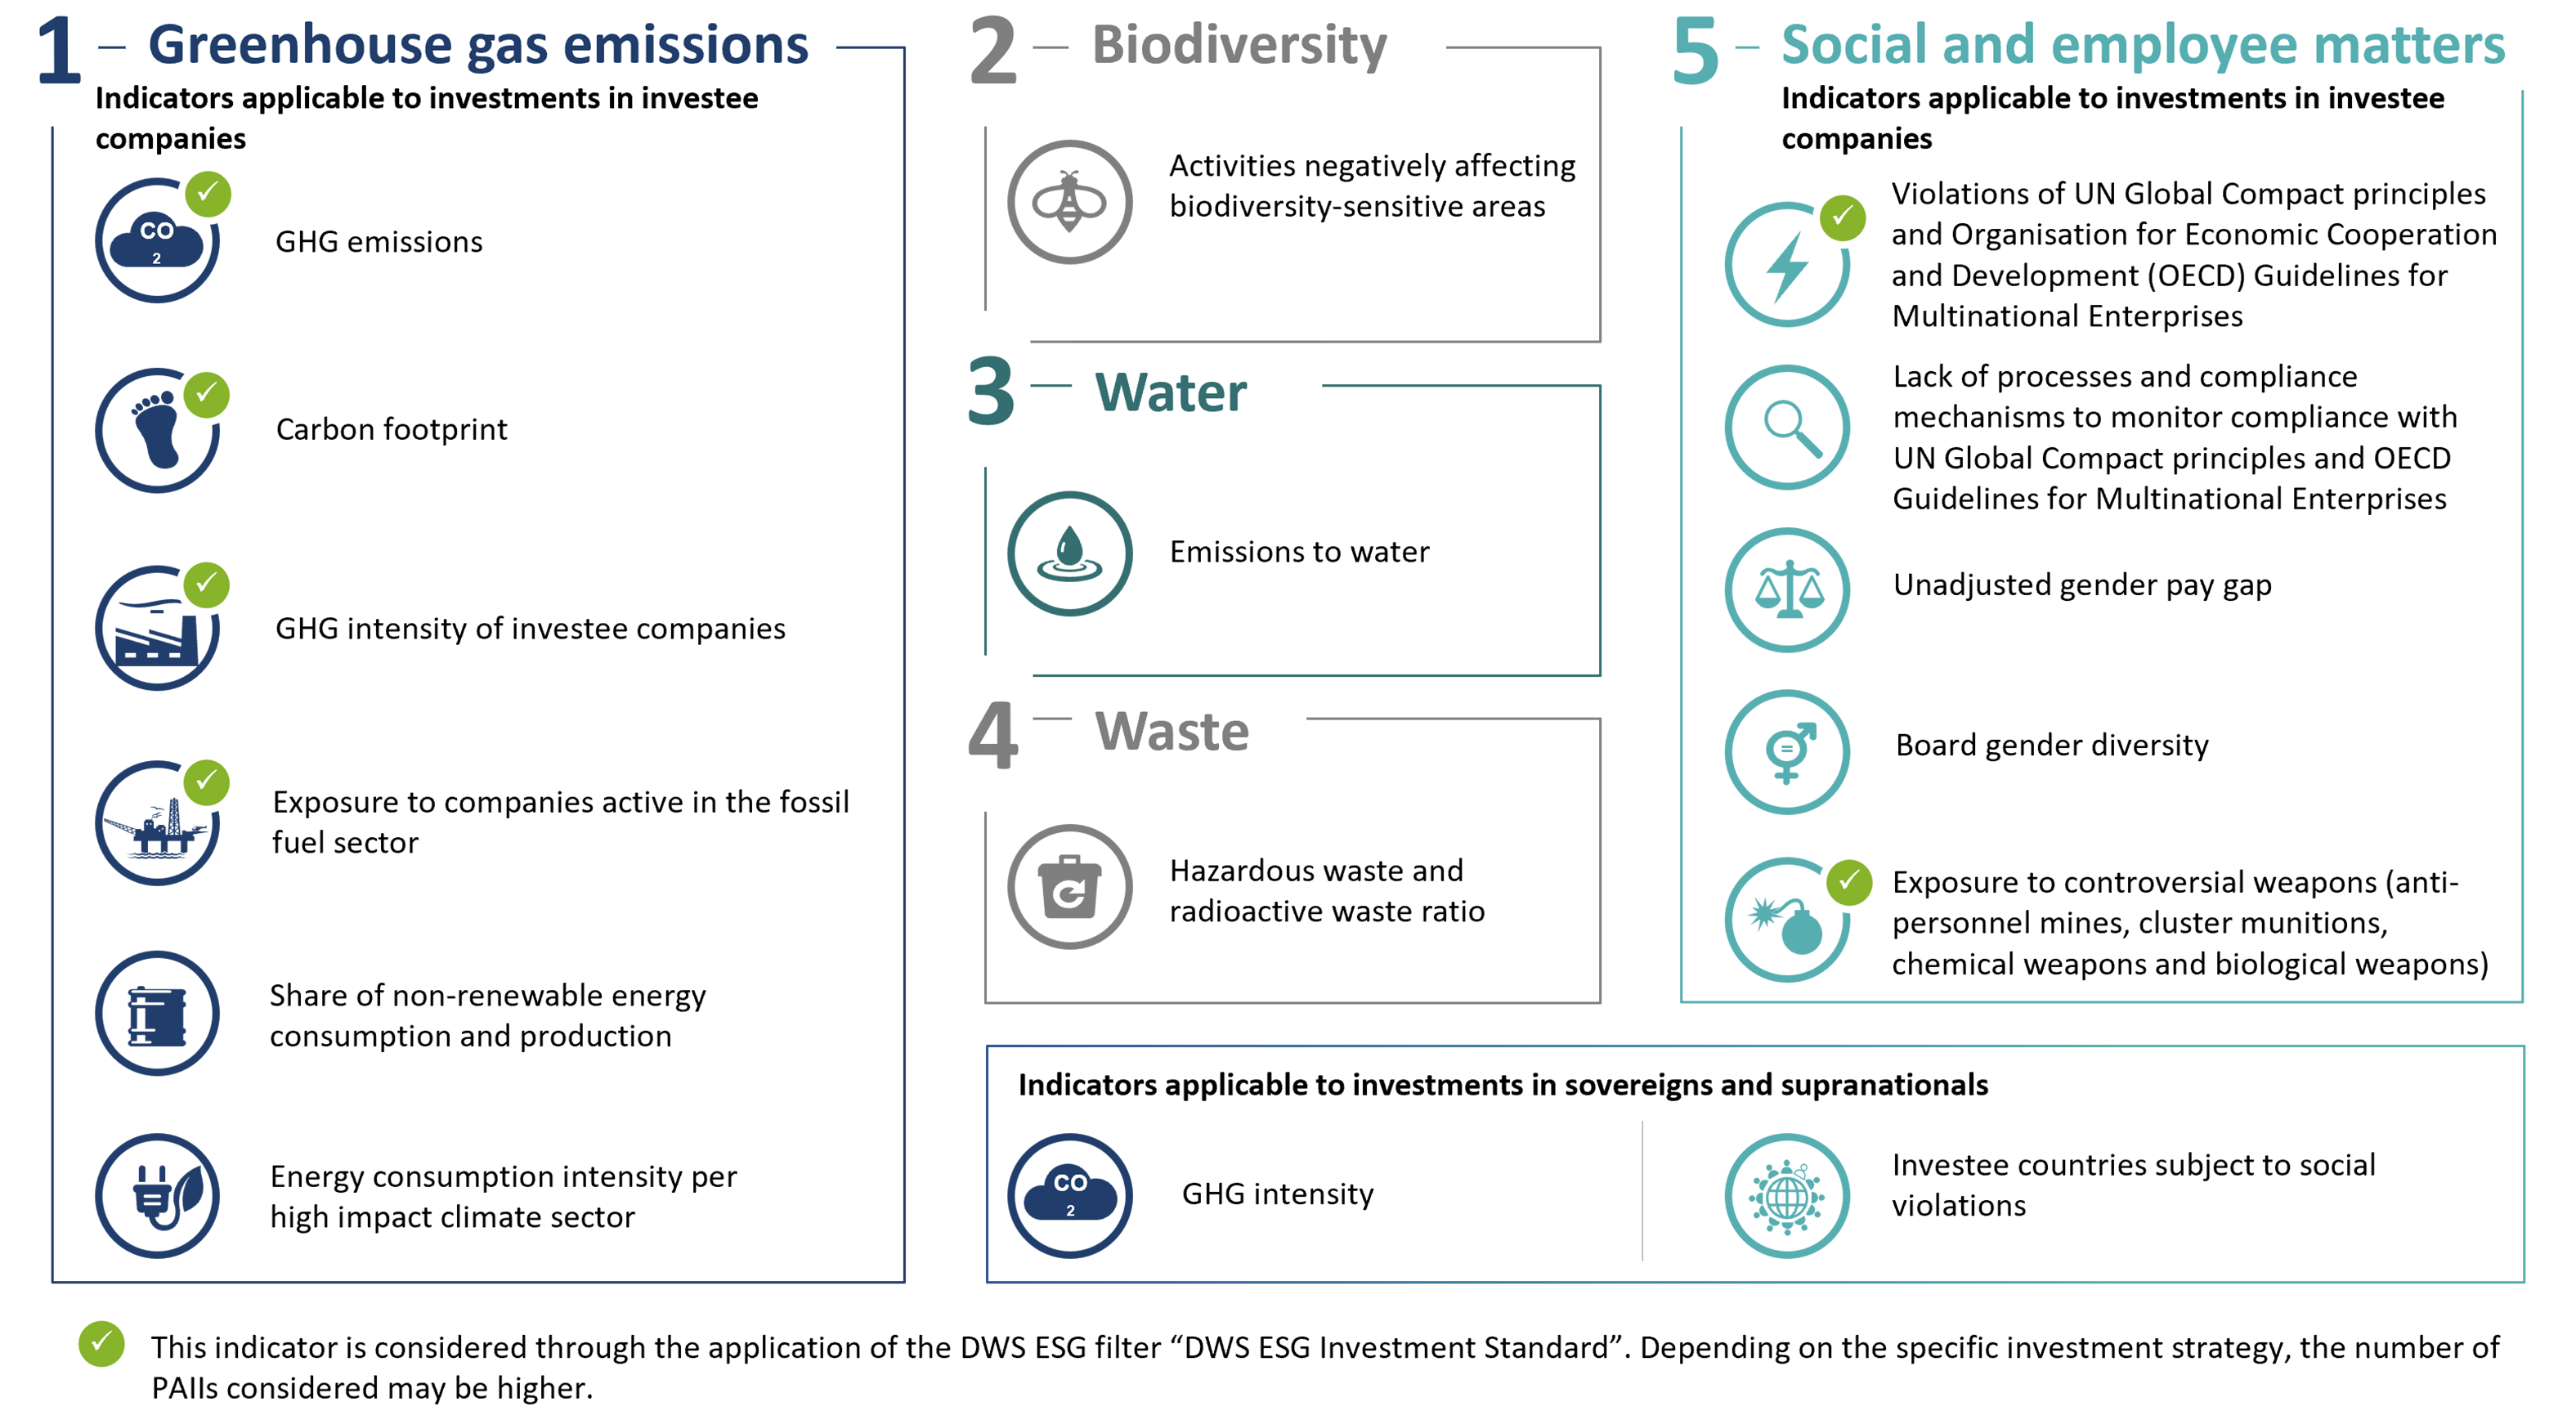 ESG - Consideration of adverse environmental and social impacts